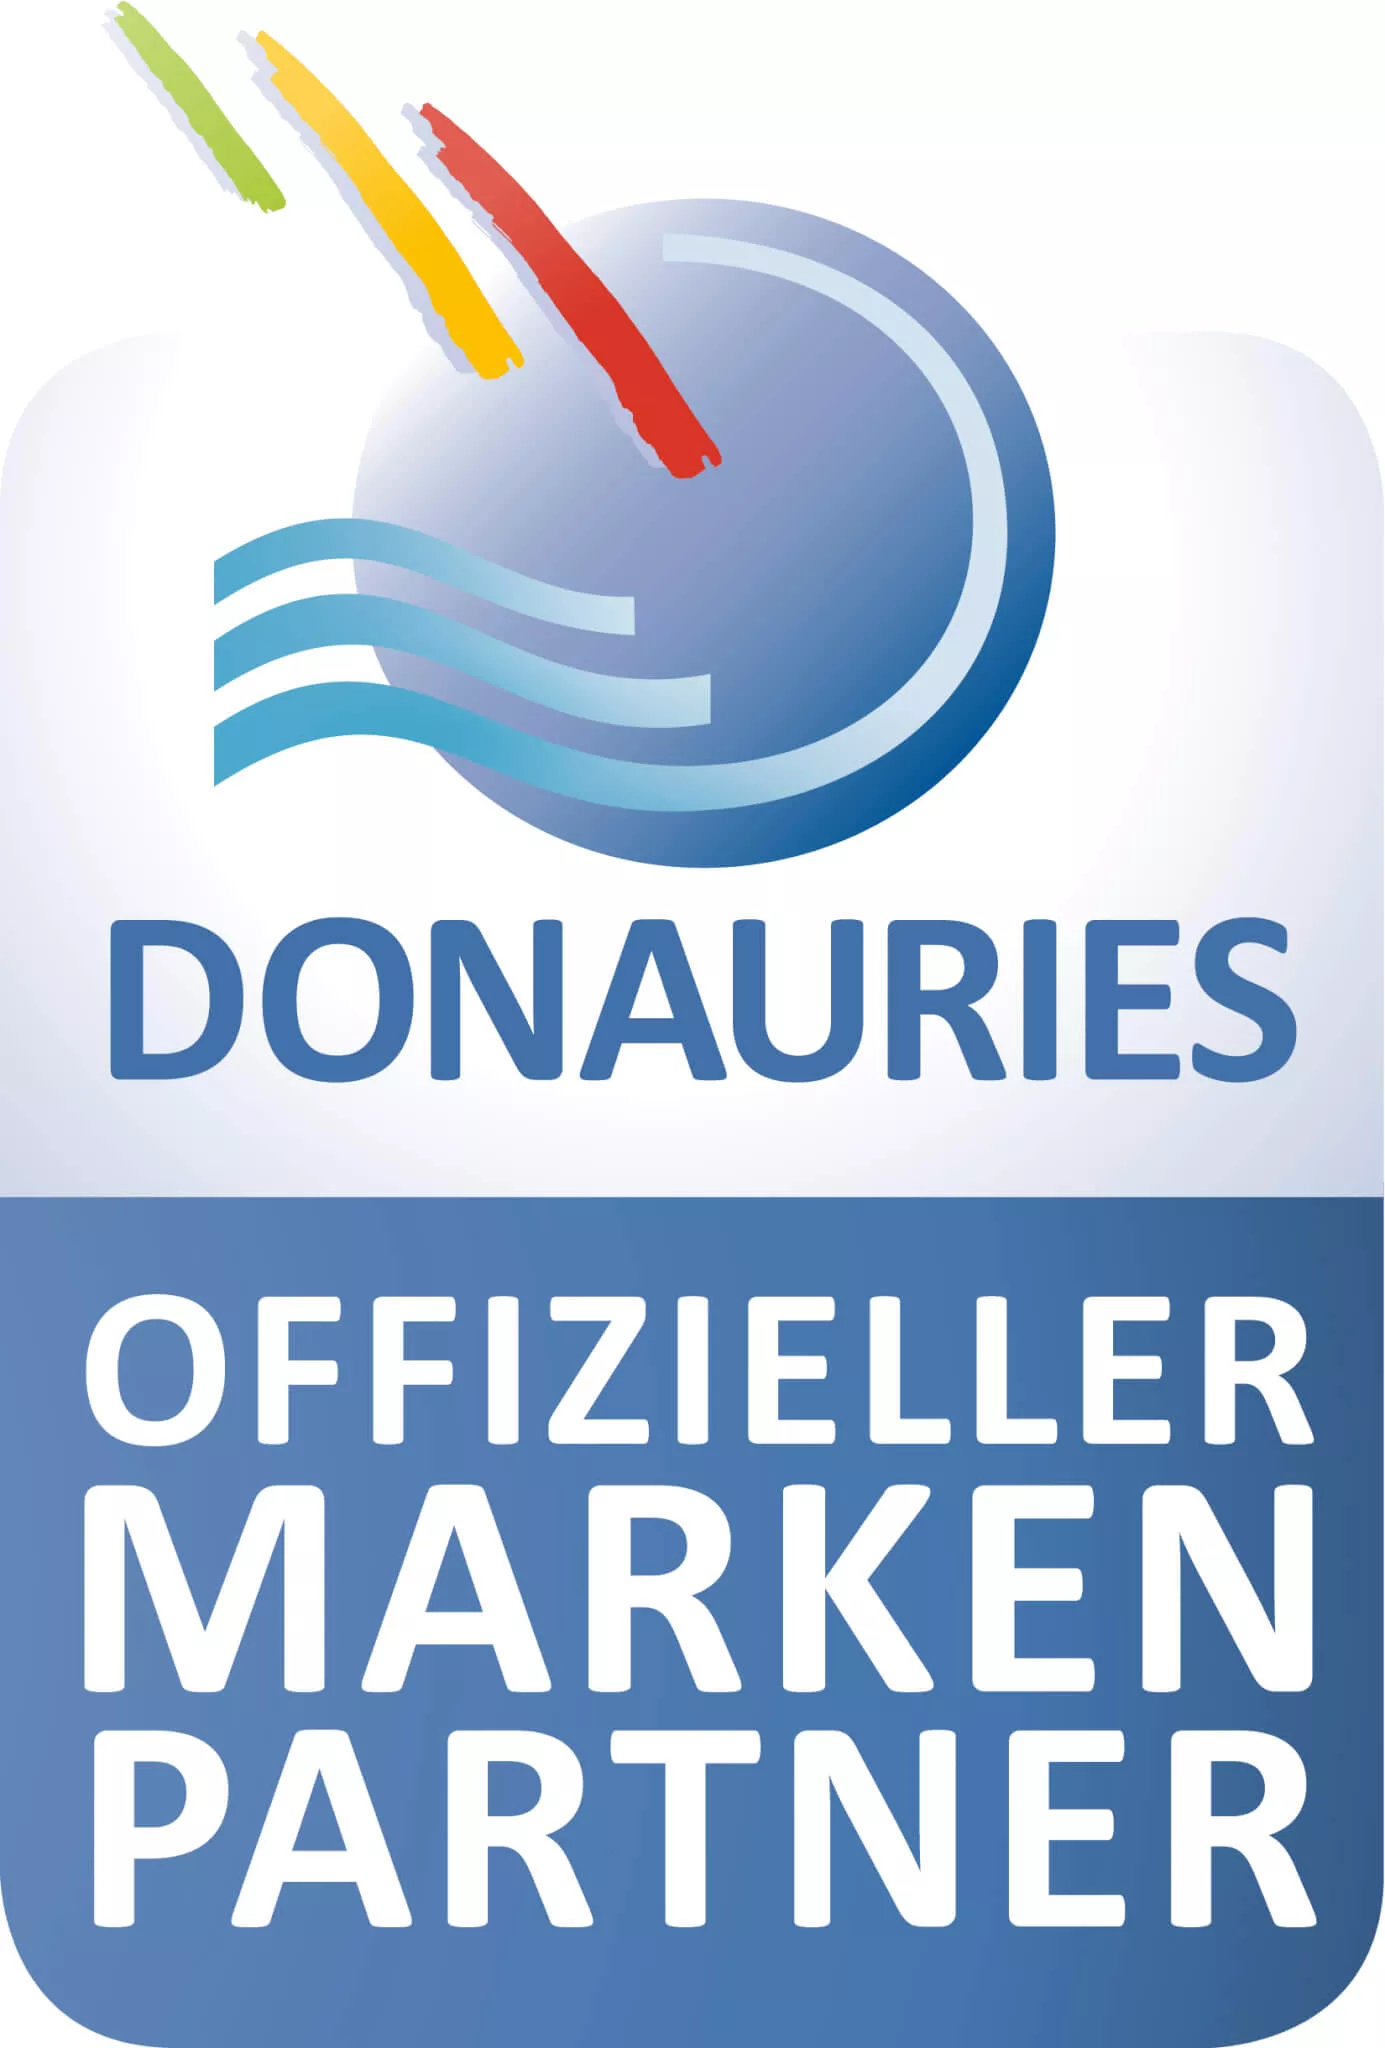 Donauries Marken Partner